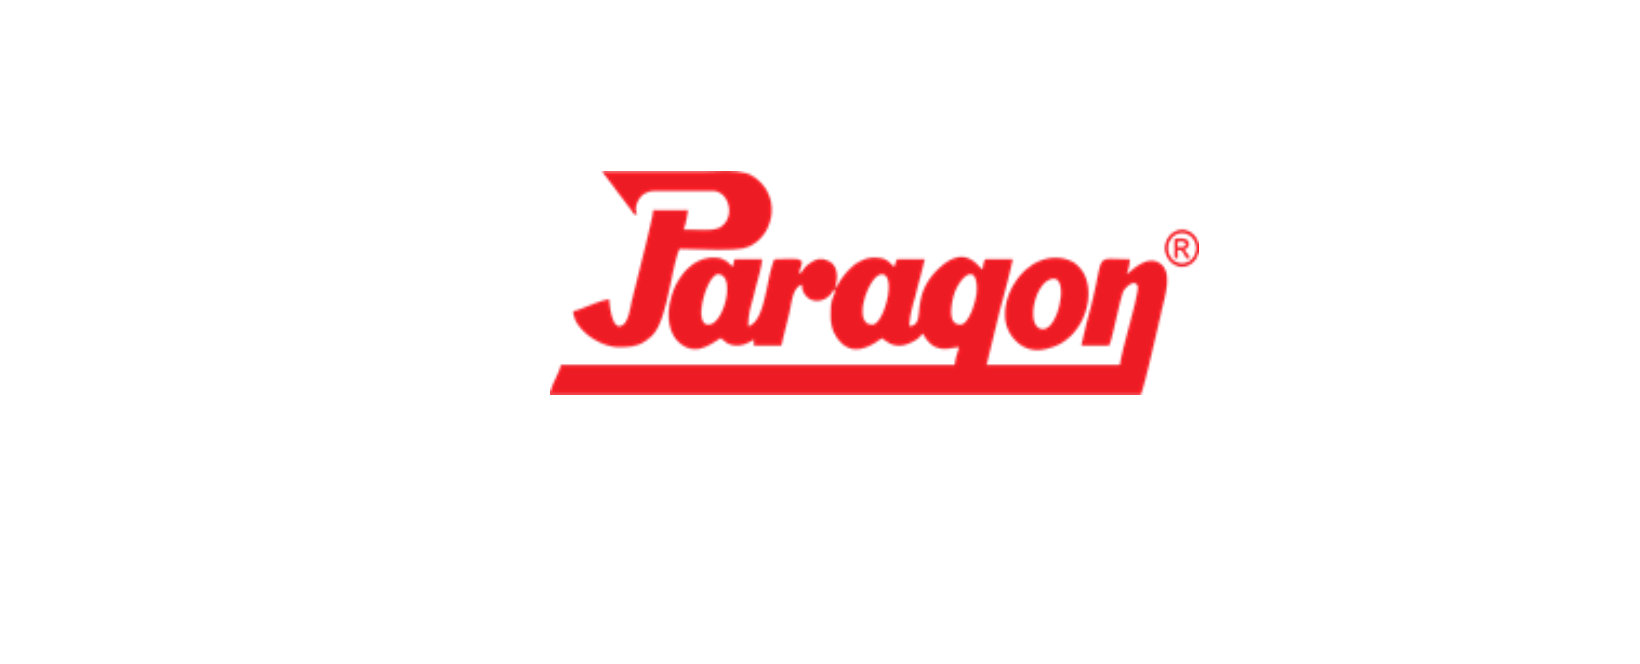 Paragon Discount Code 2022